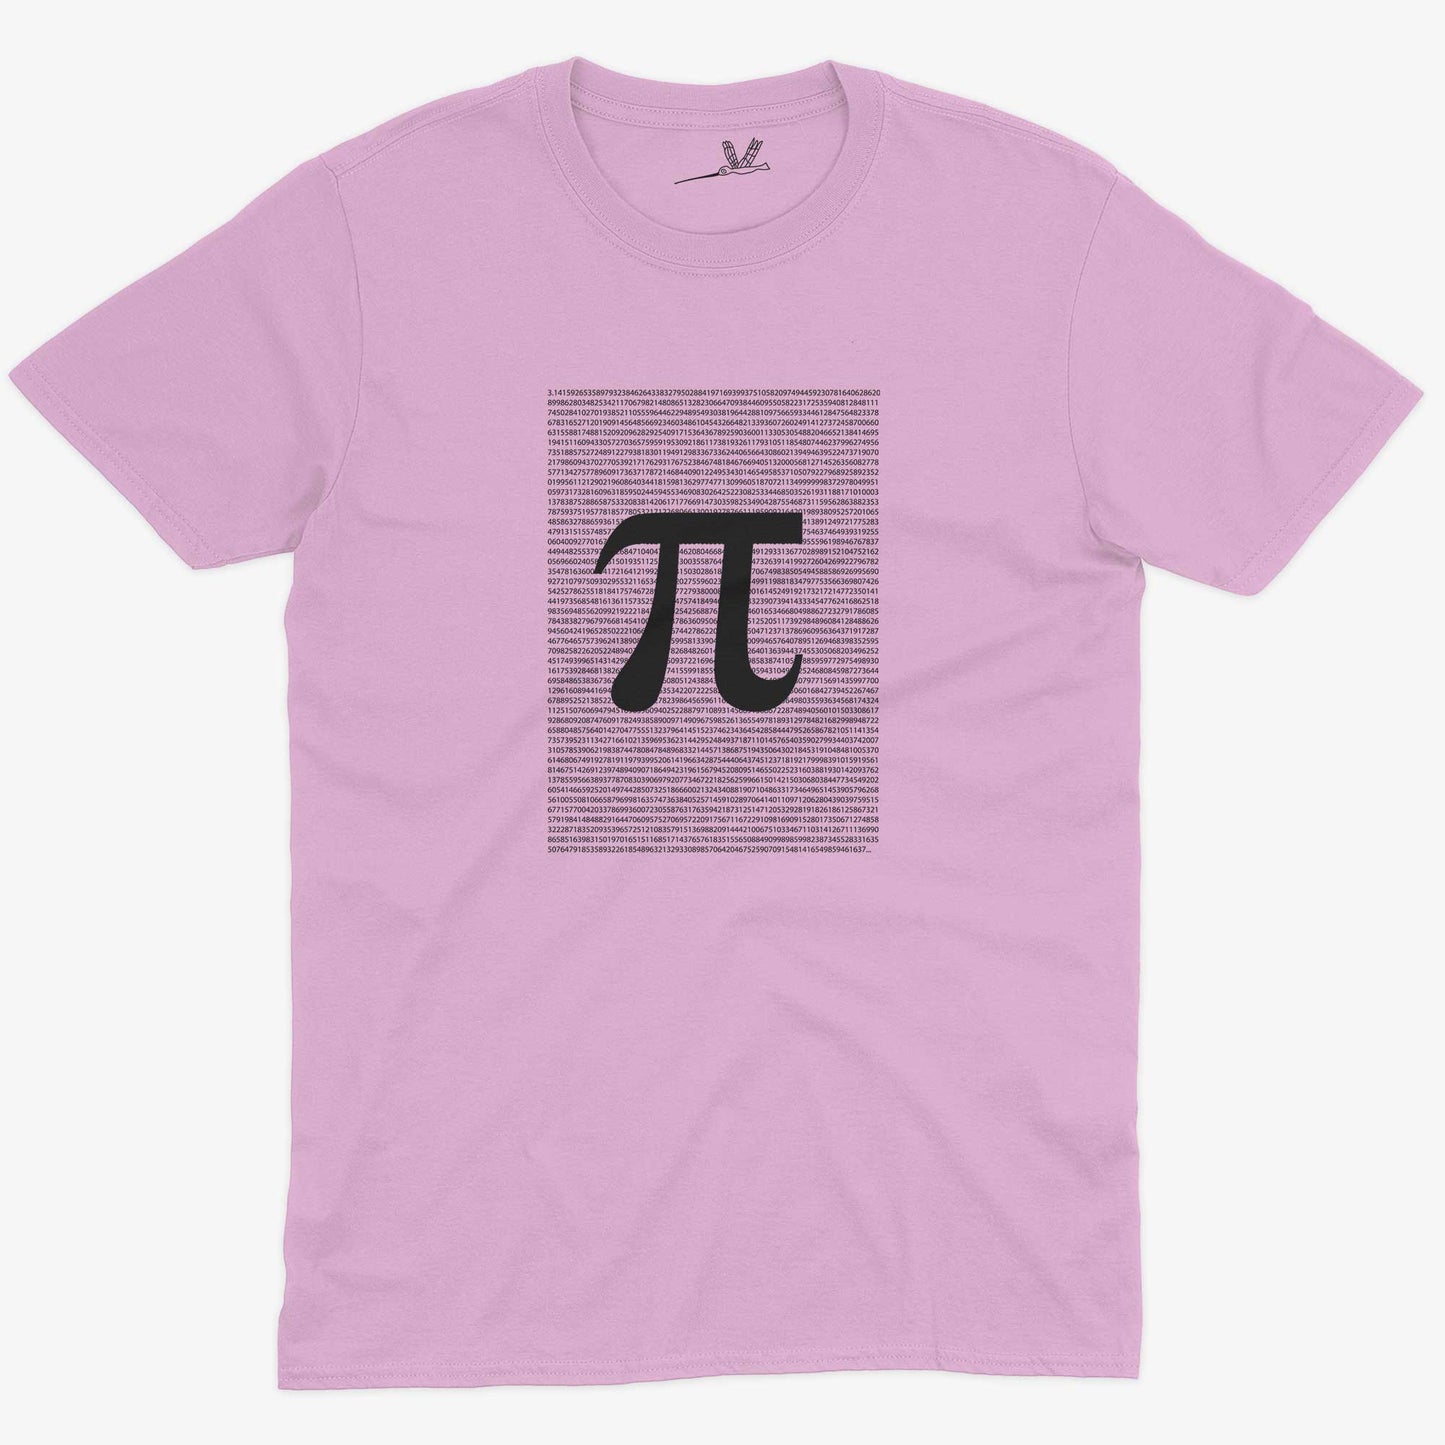 Irrational Pi Unisex Or Women's Cotton T-shirt-Pink-Unisex